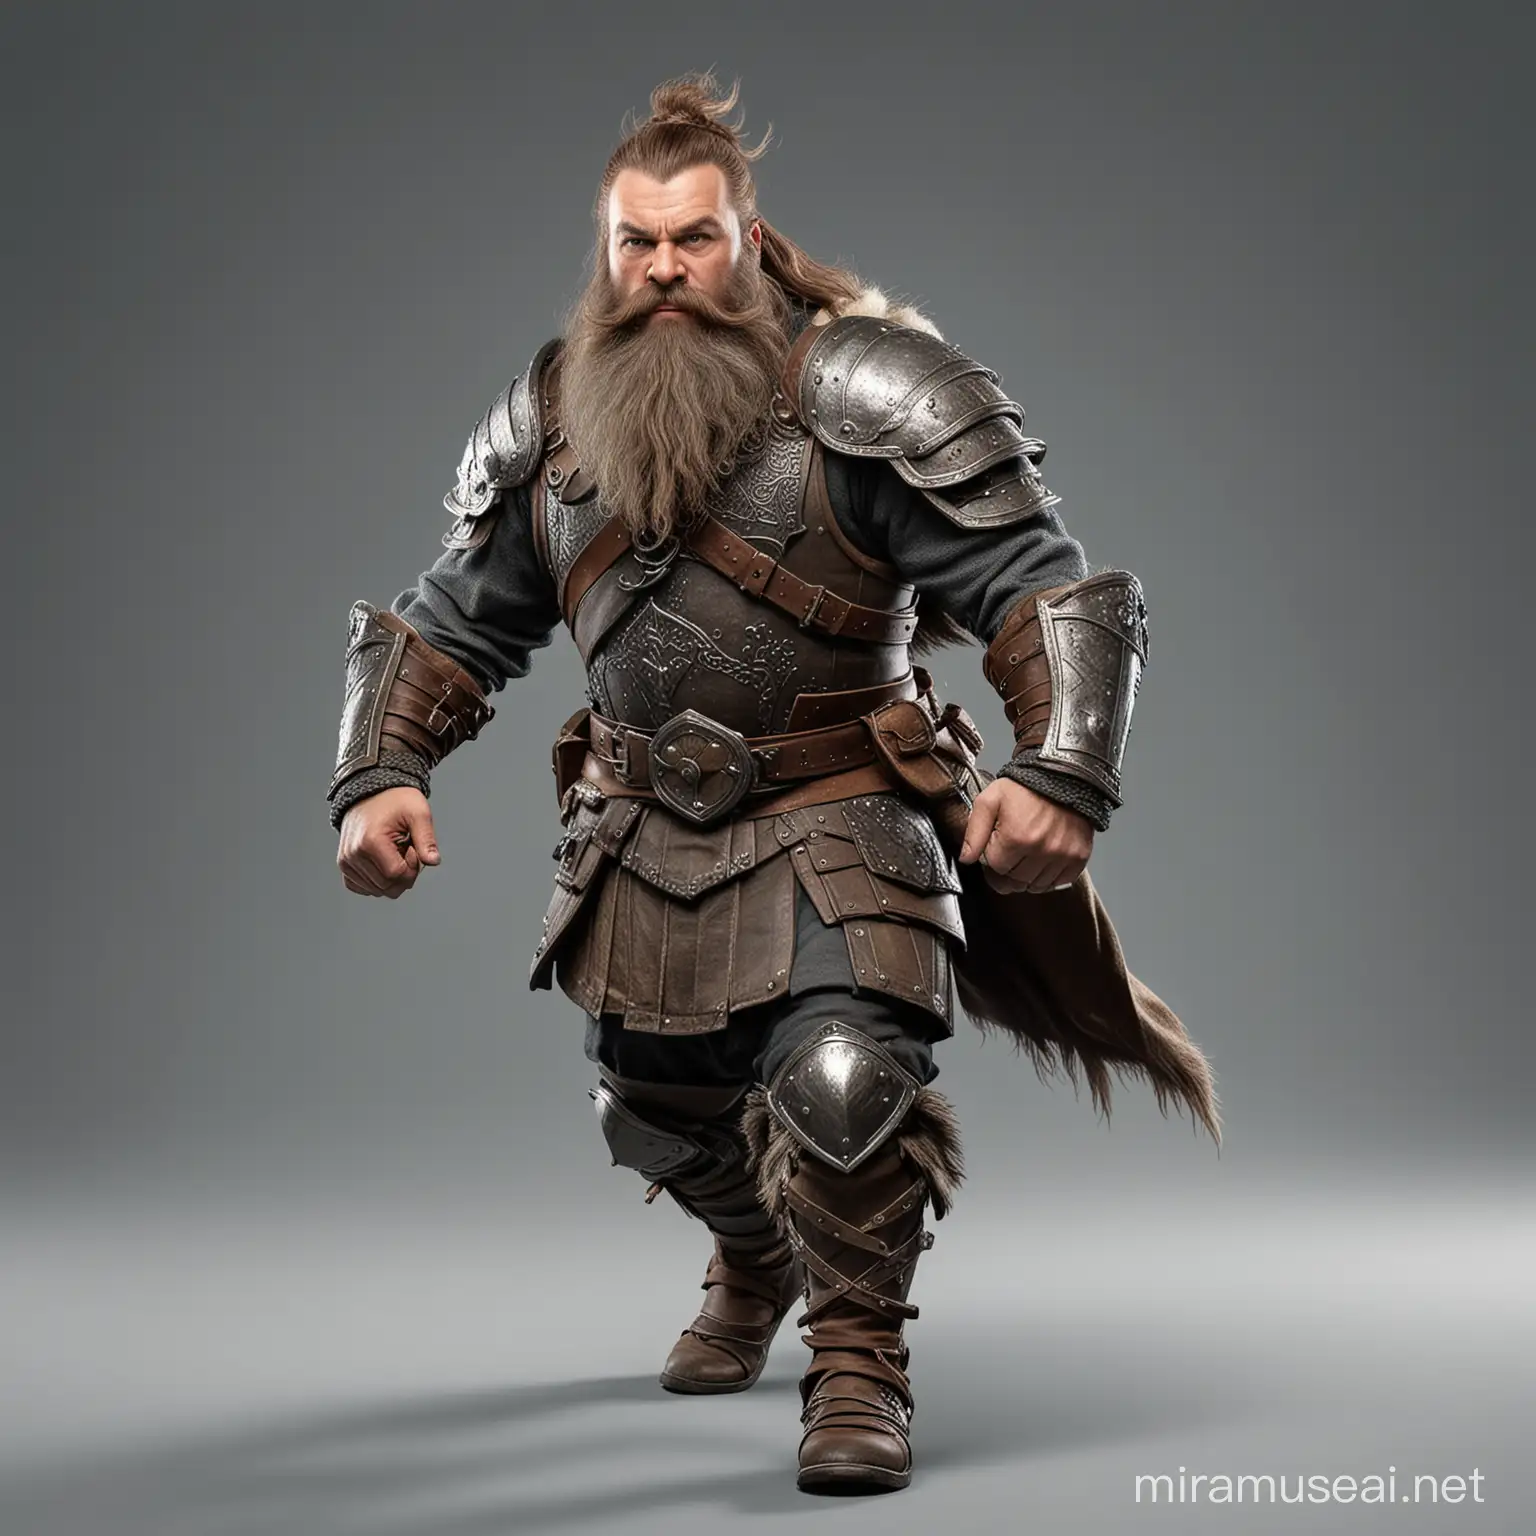 Dwarf Warrior in Full Armor Charging Through Fantasy Medieval Landscape